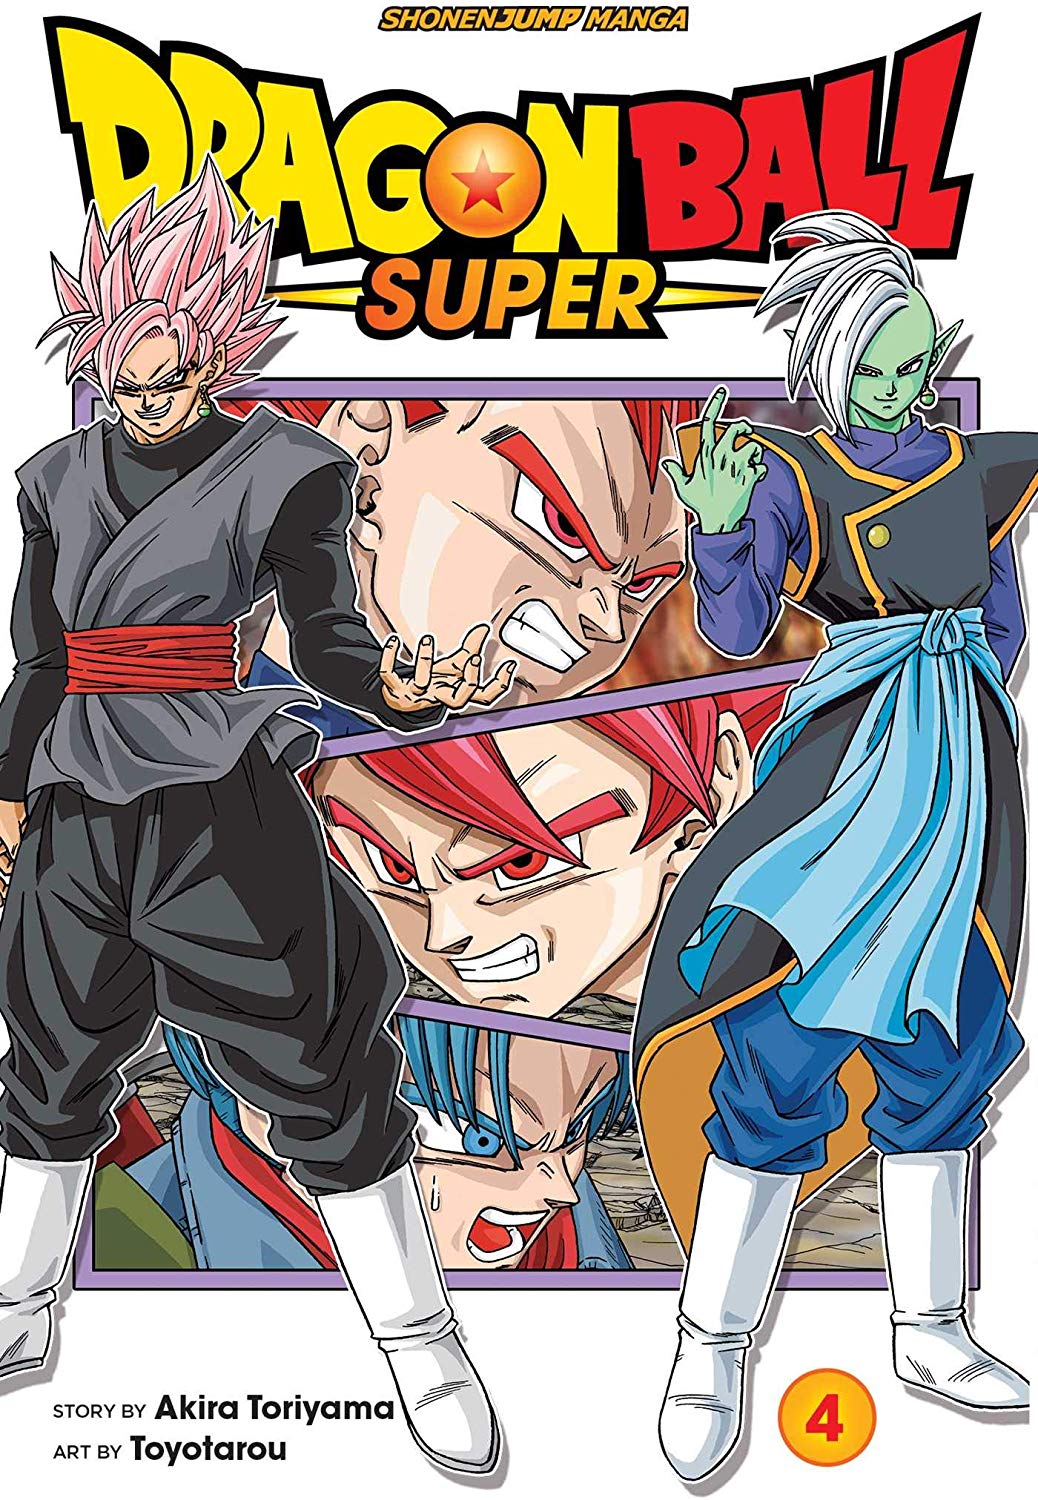 Dragon Ball Super Manga Volumes 1-14 English 1 2 3 4 5 6 7 8 9 10 11 12 13  14